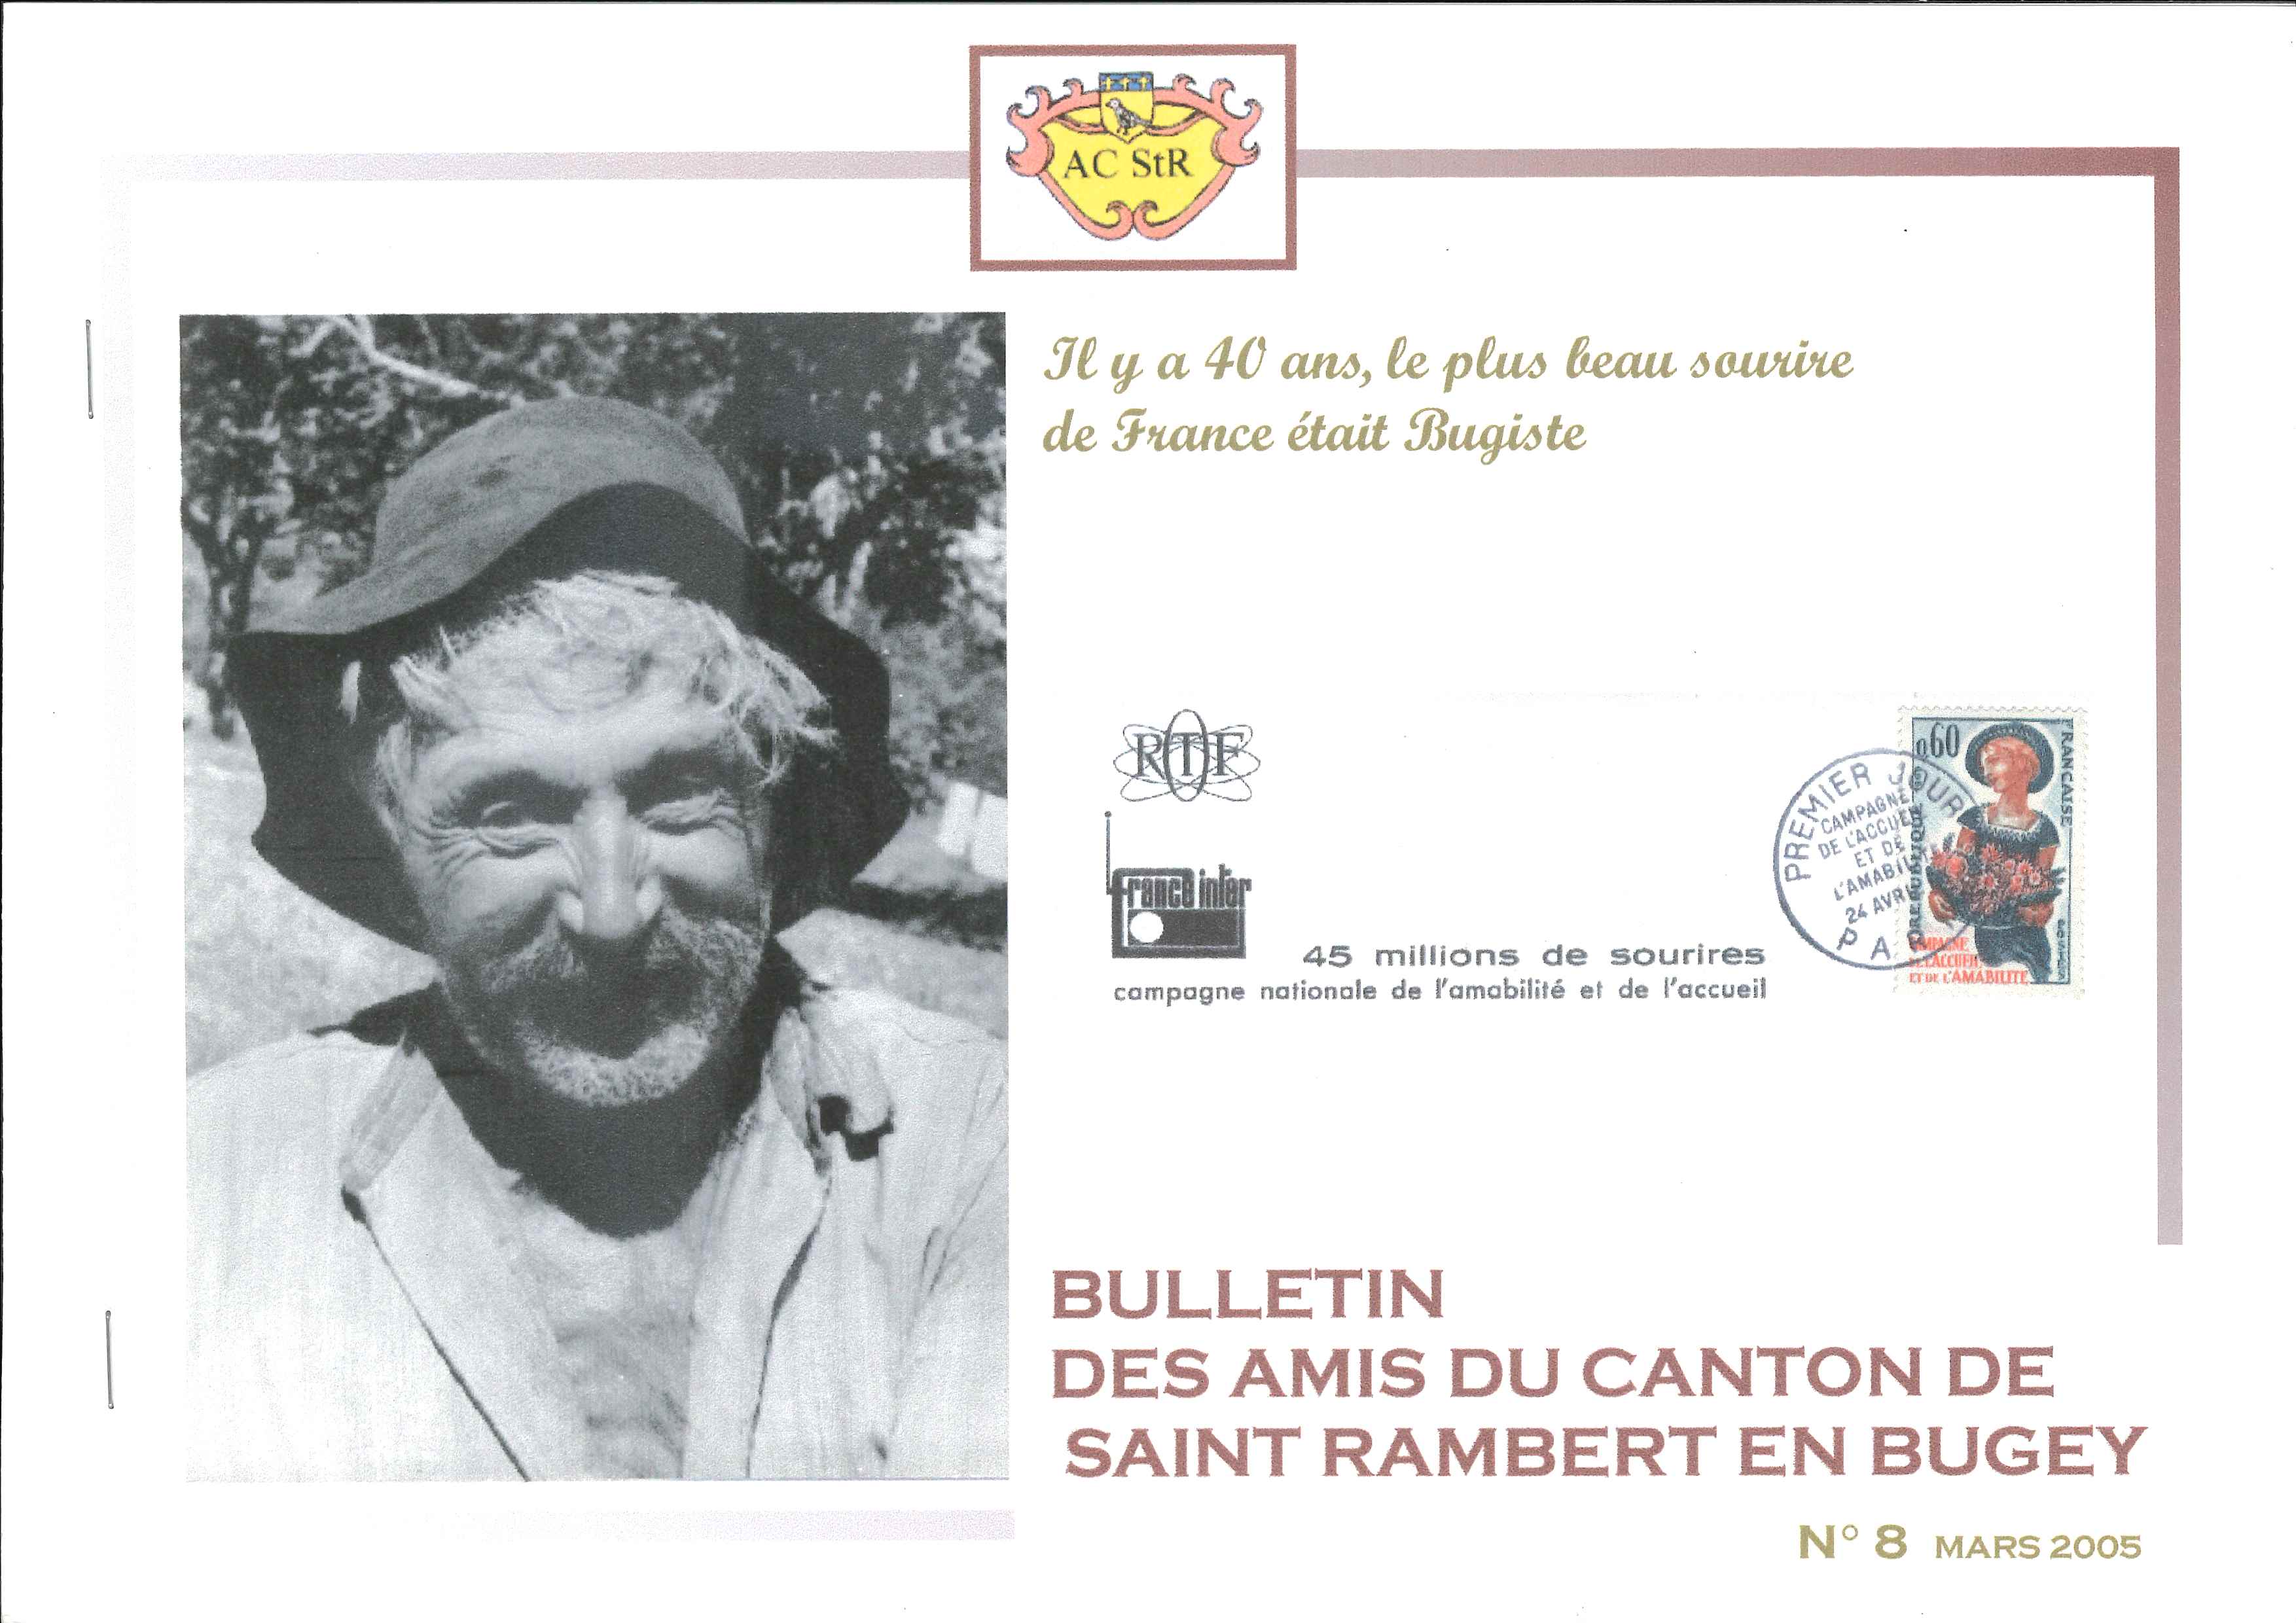 Bulletin des amis du canton de Saint Rambert en Bugey n8 